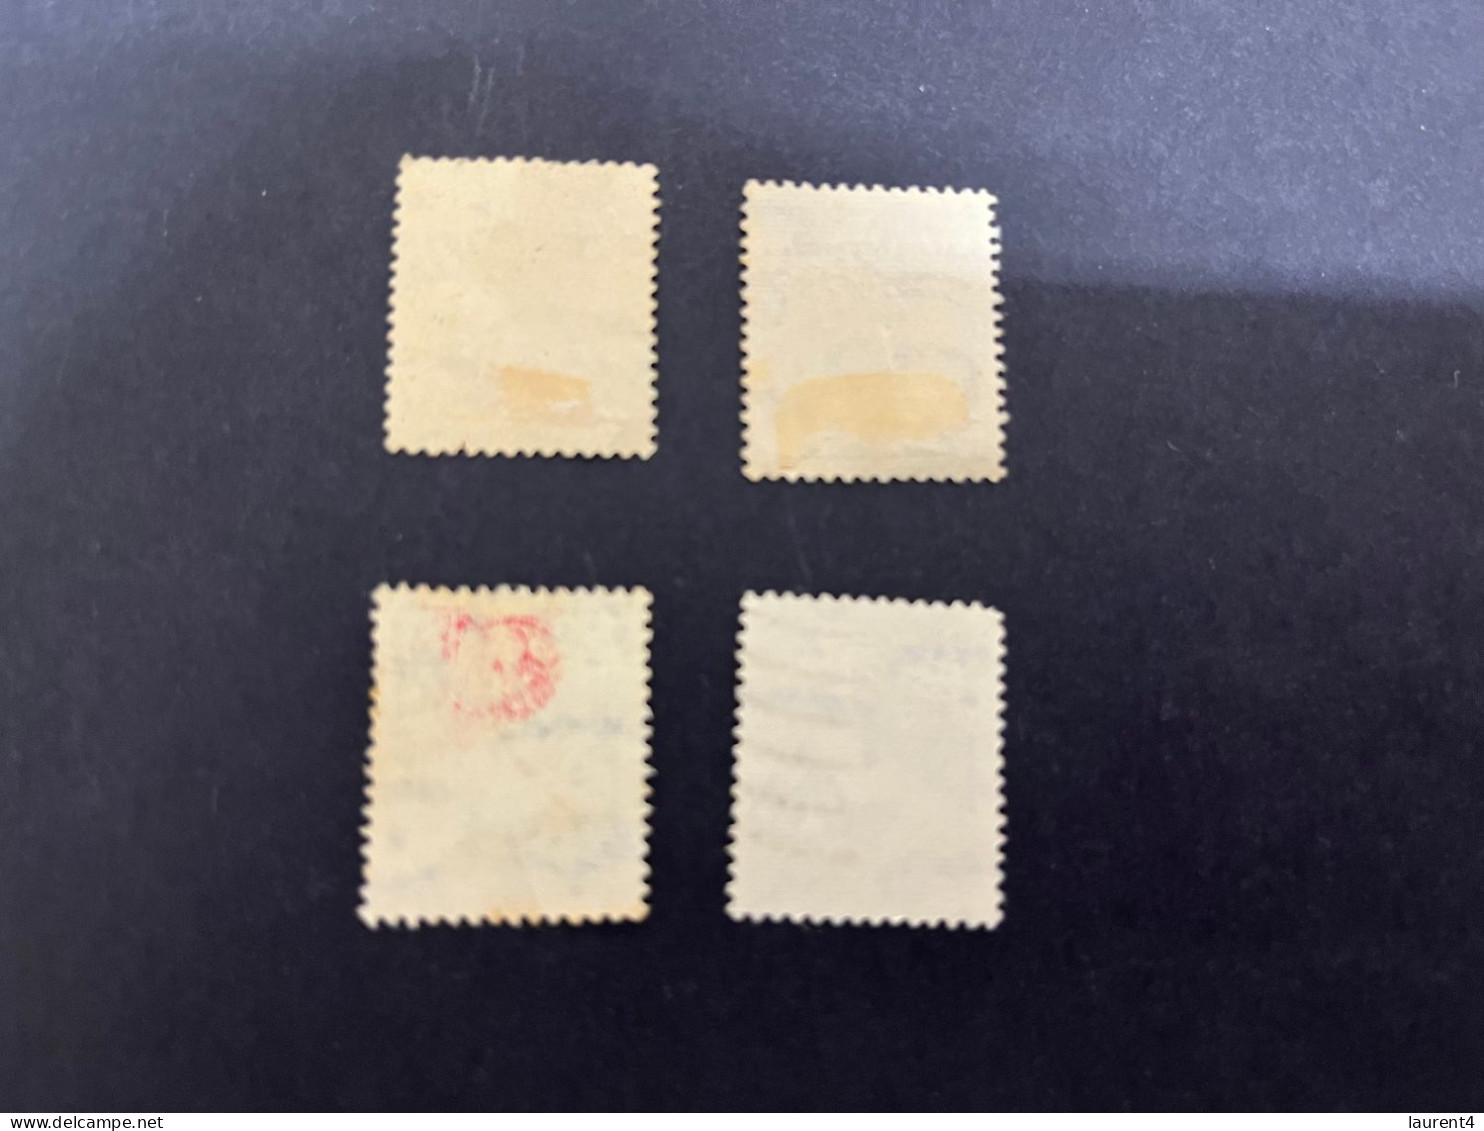 8-1-2024 (stamp) 4 Older Cancelled Stamp From Egypt (military Over-print) - Oblitérés